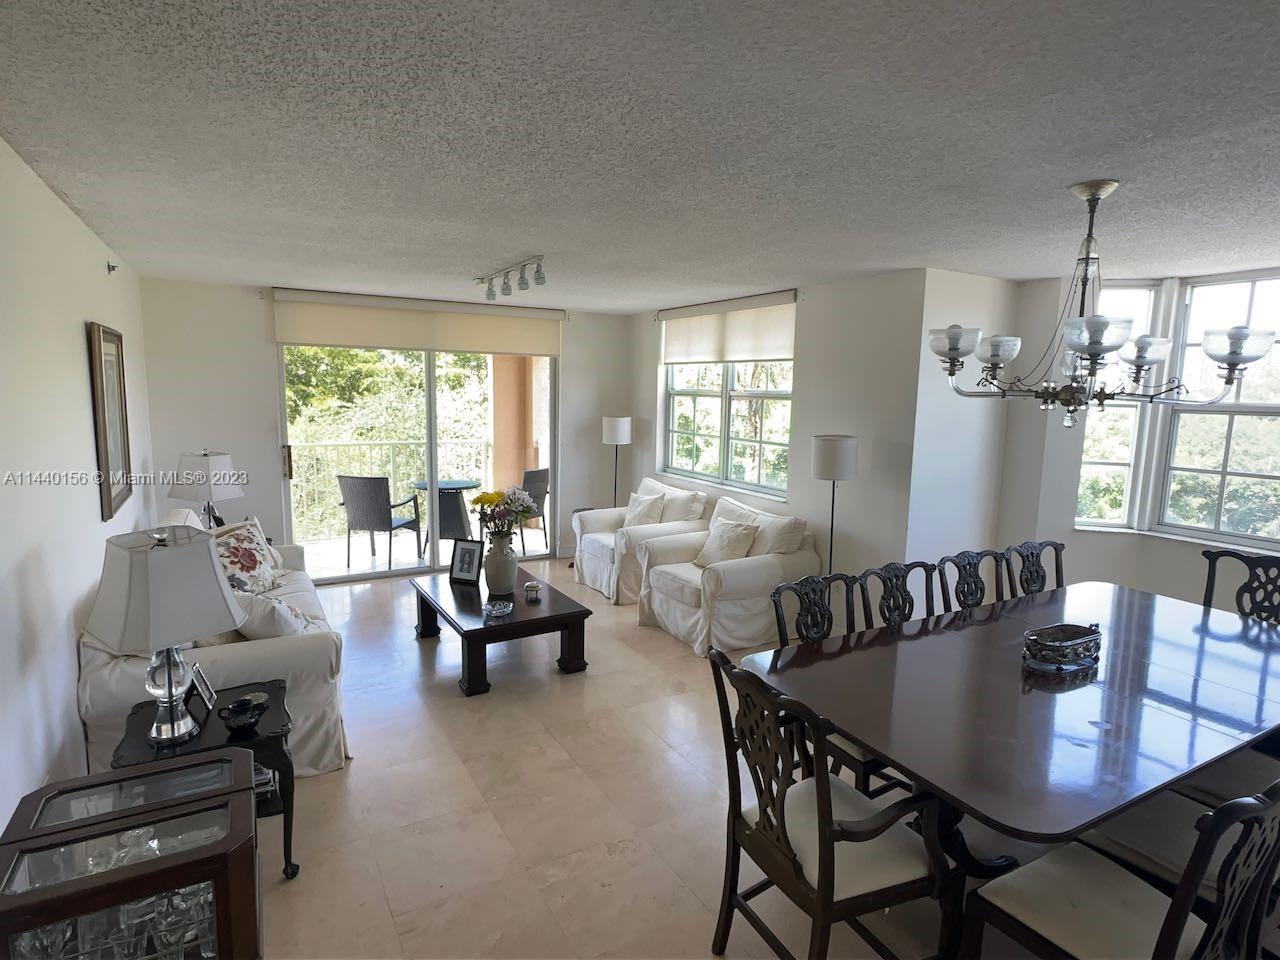 Property for Sale at 19501 E Country Club Dr 9507, Aventura, Miami-Dade County, Florida - Bedrooms: 3 
Bathrooms: 2  - $579,000